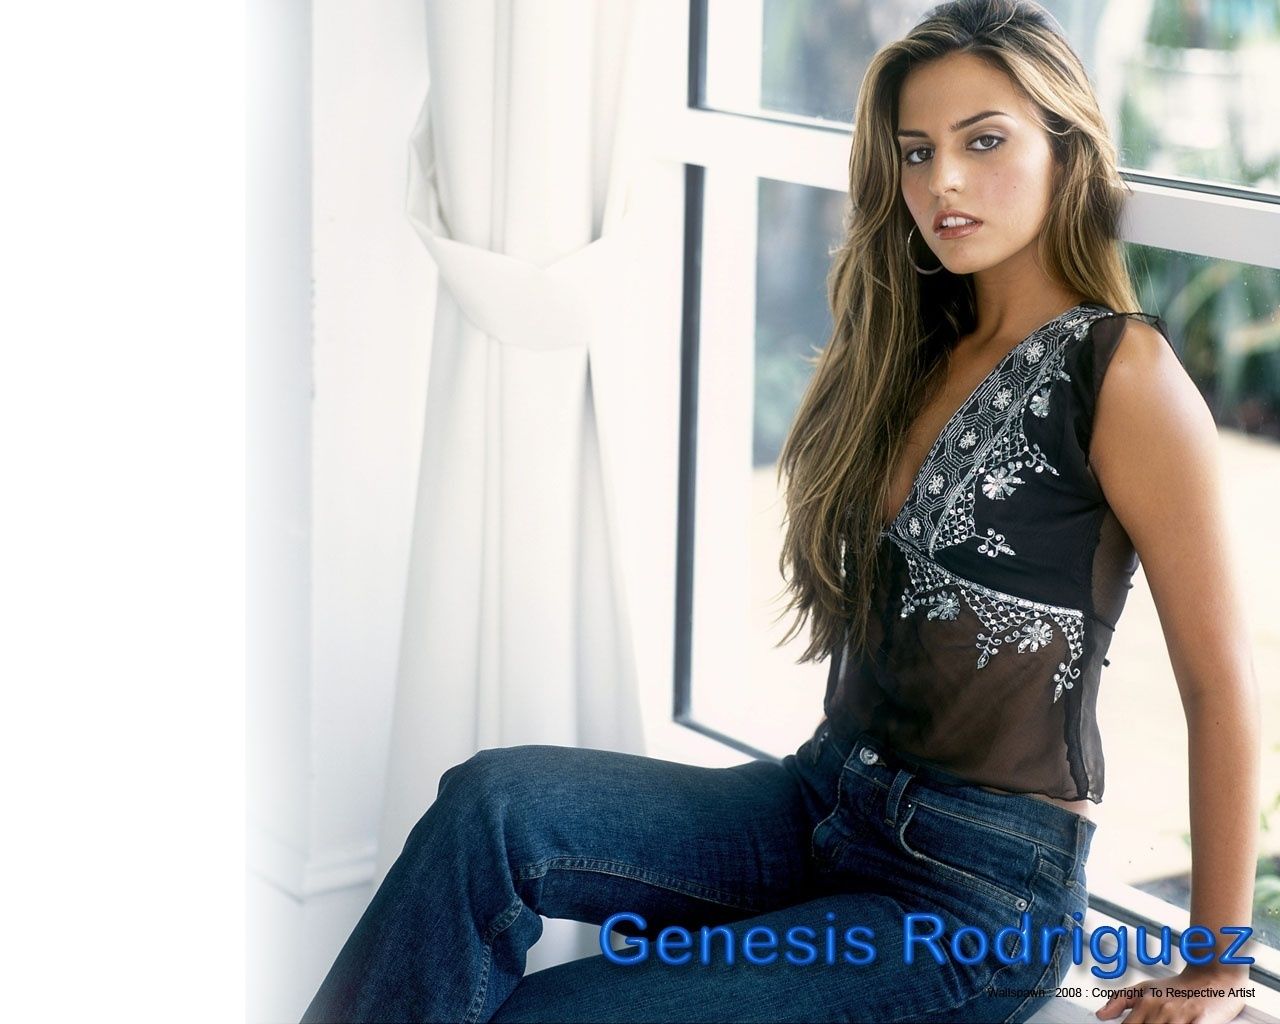 Genesis Rodriguez Wallpaper: Genesis Rodriguez. Genesis rodriguez, Beautiful celebrities, Celebrities